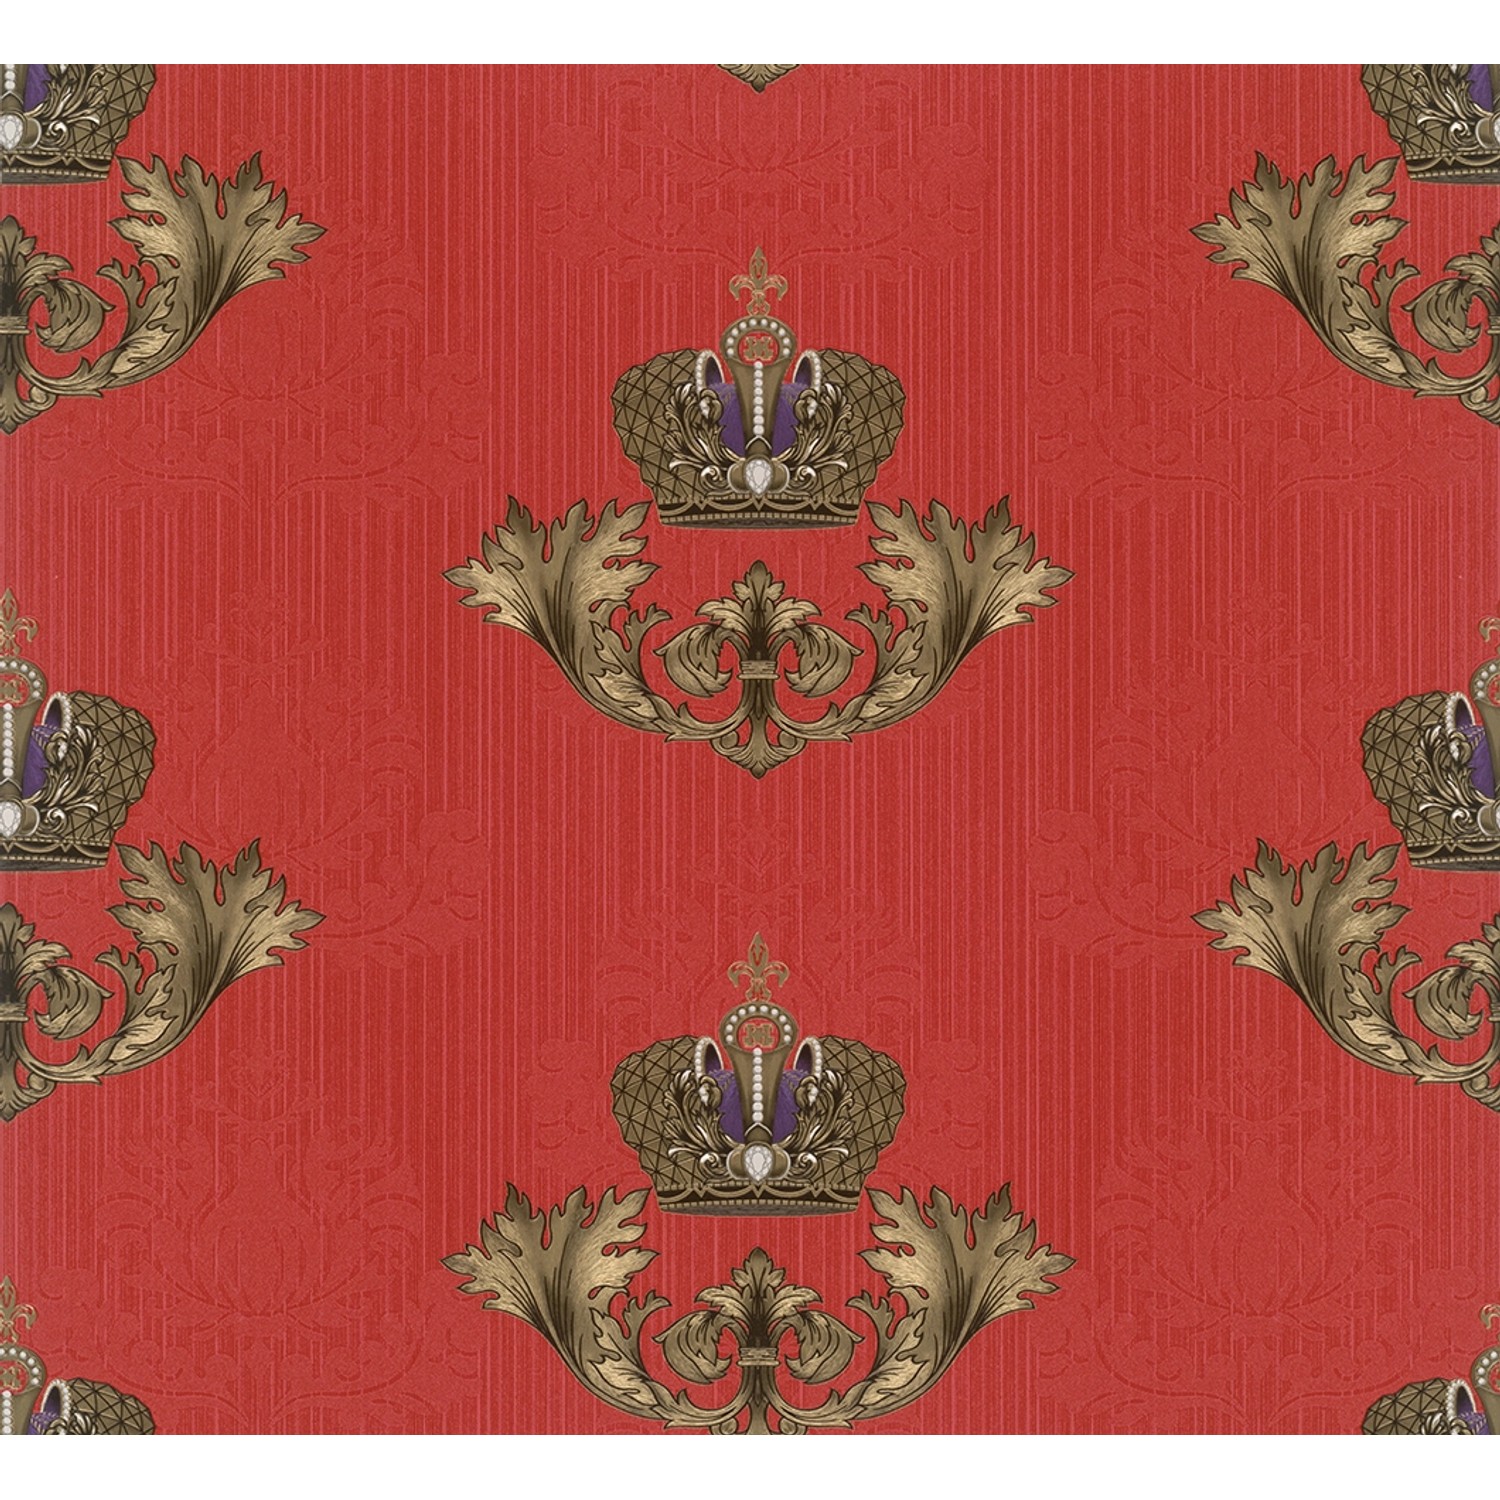 Glööckler Vliestapete Imperial Krone Blattmotiv Wappenoptik Rot-Gold von Glööckler